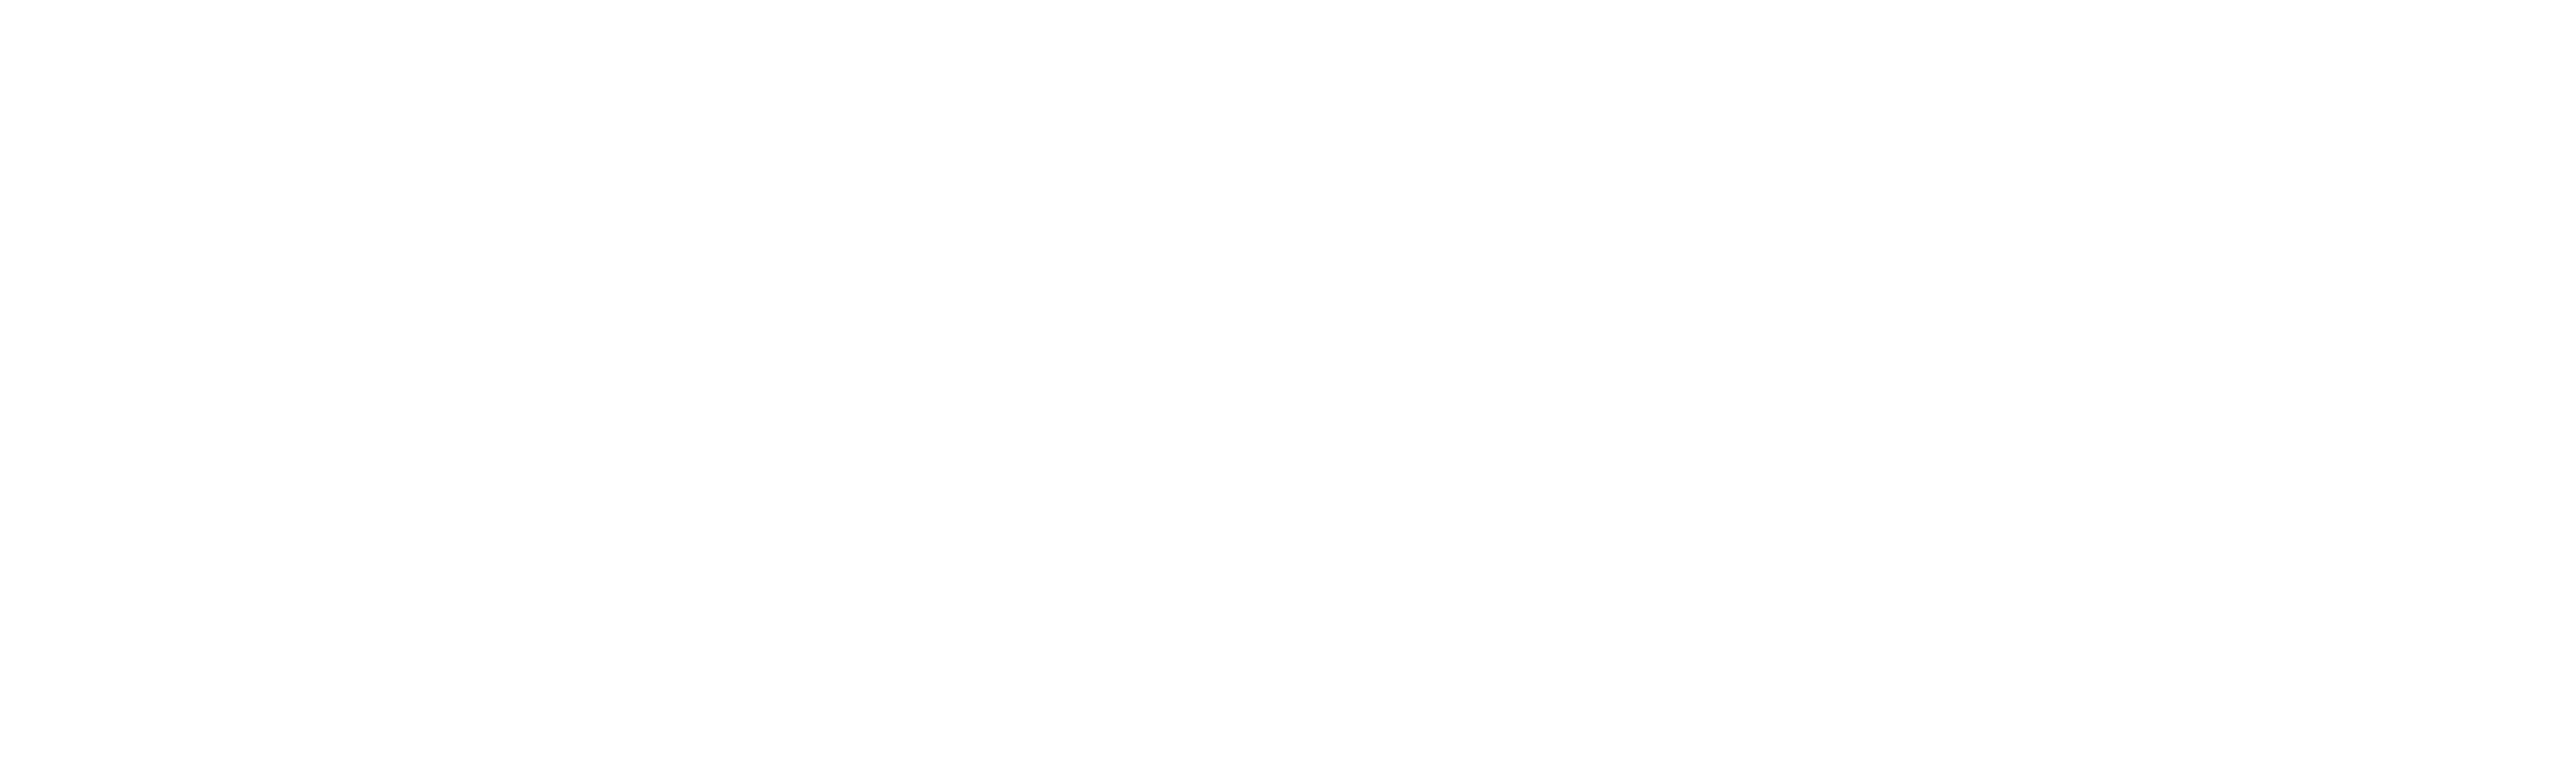 banking tech awards